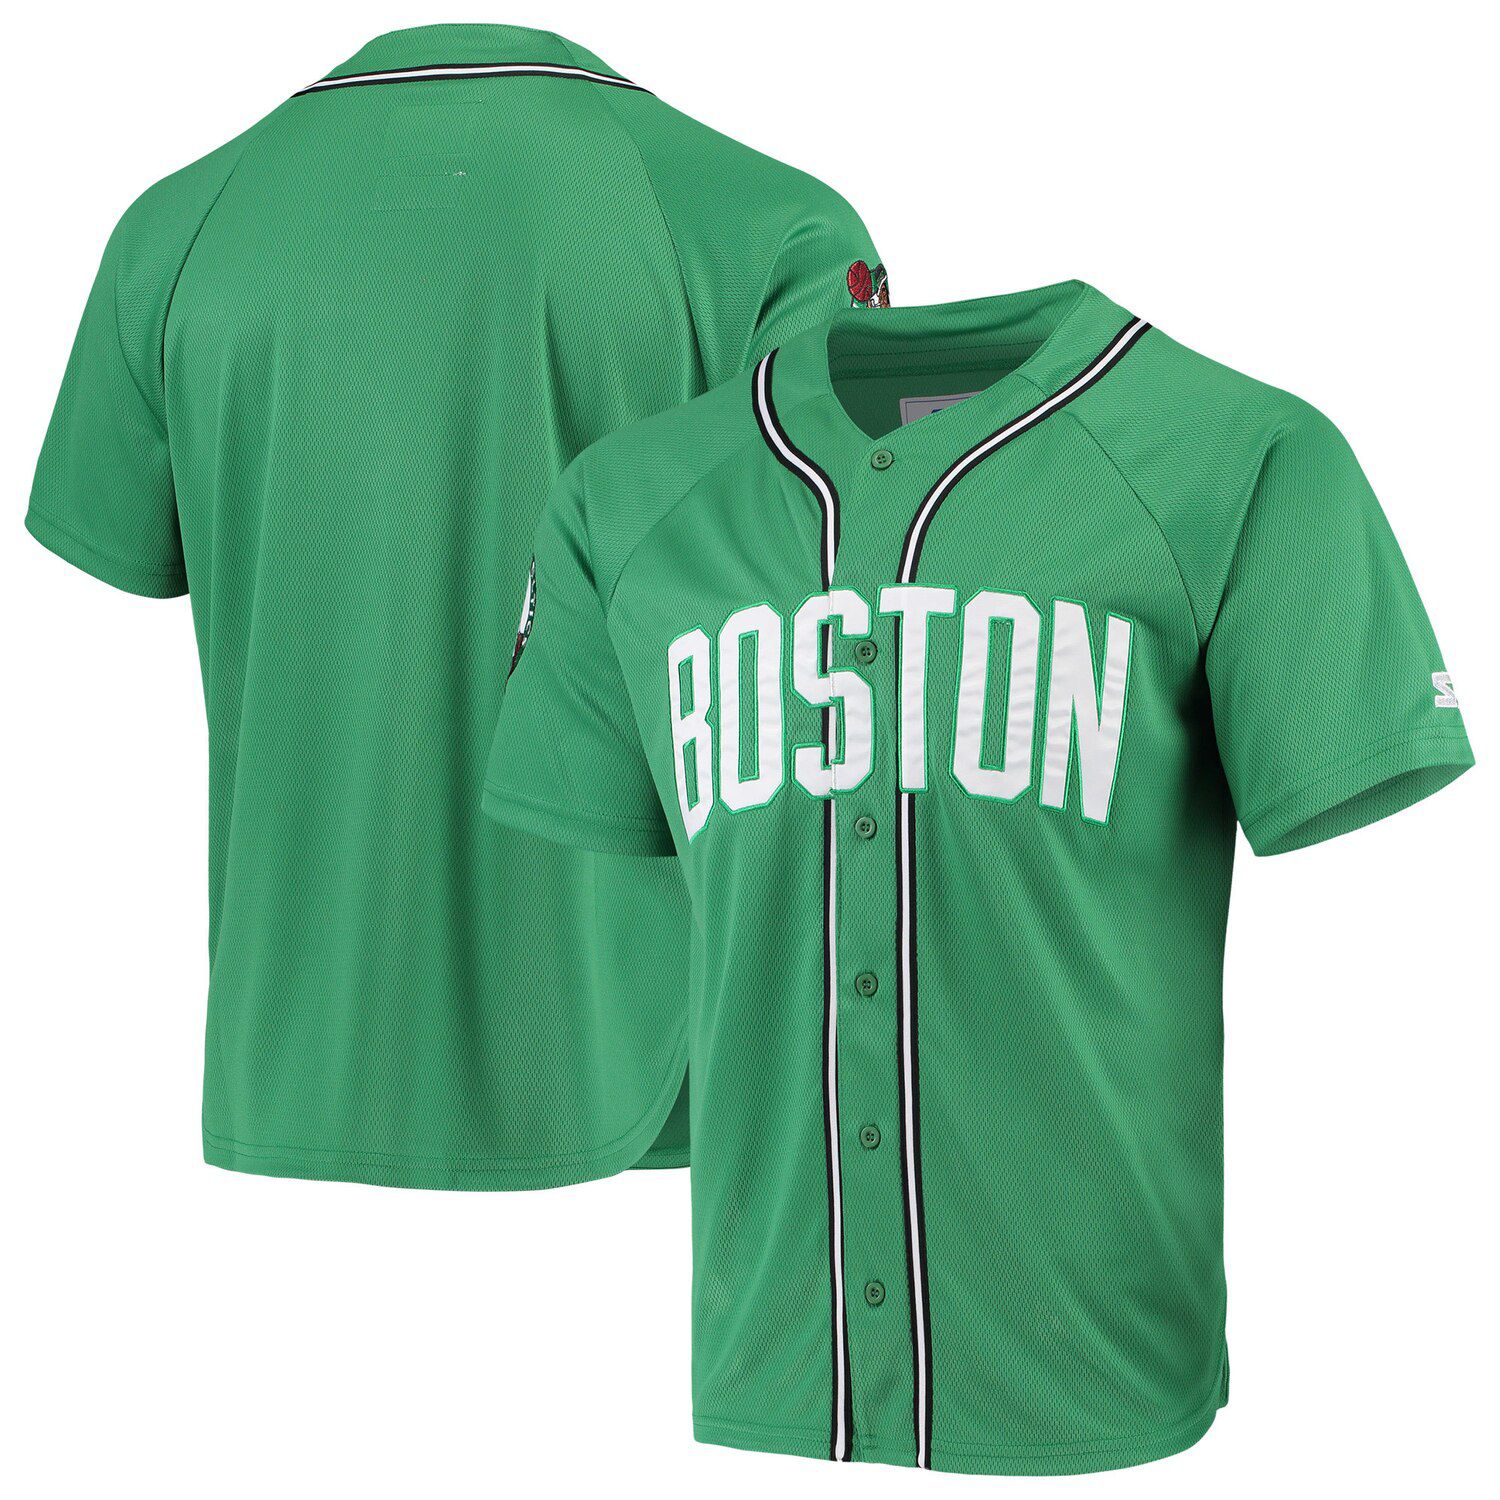 kelly green baseball jersey